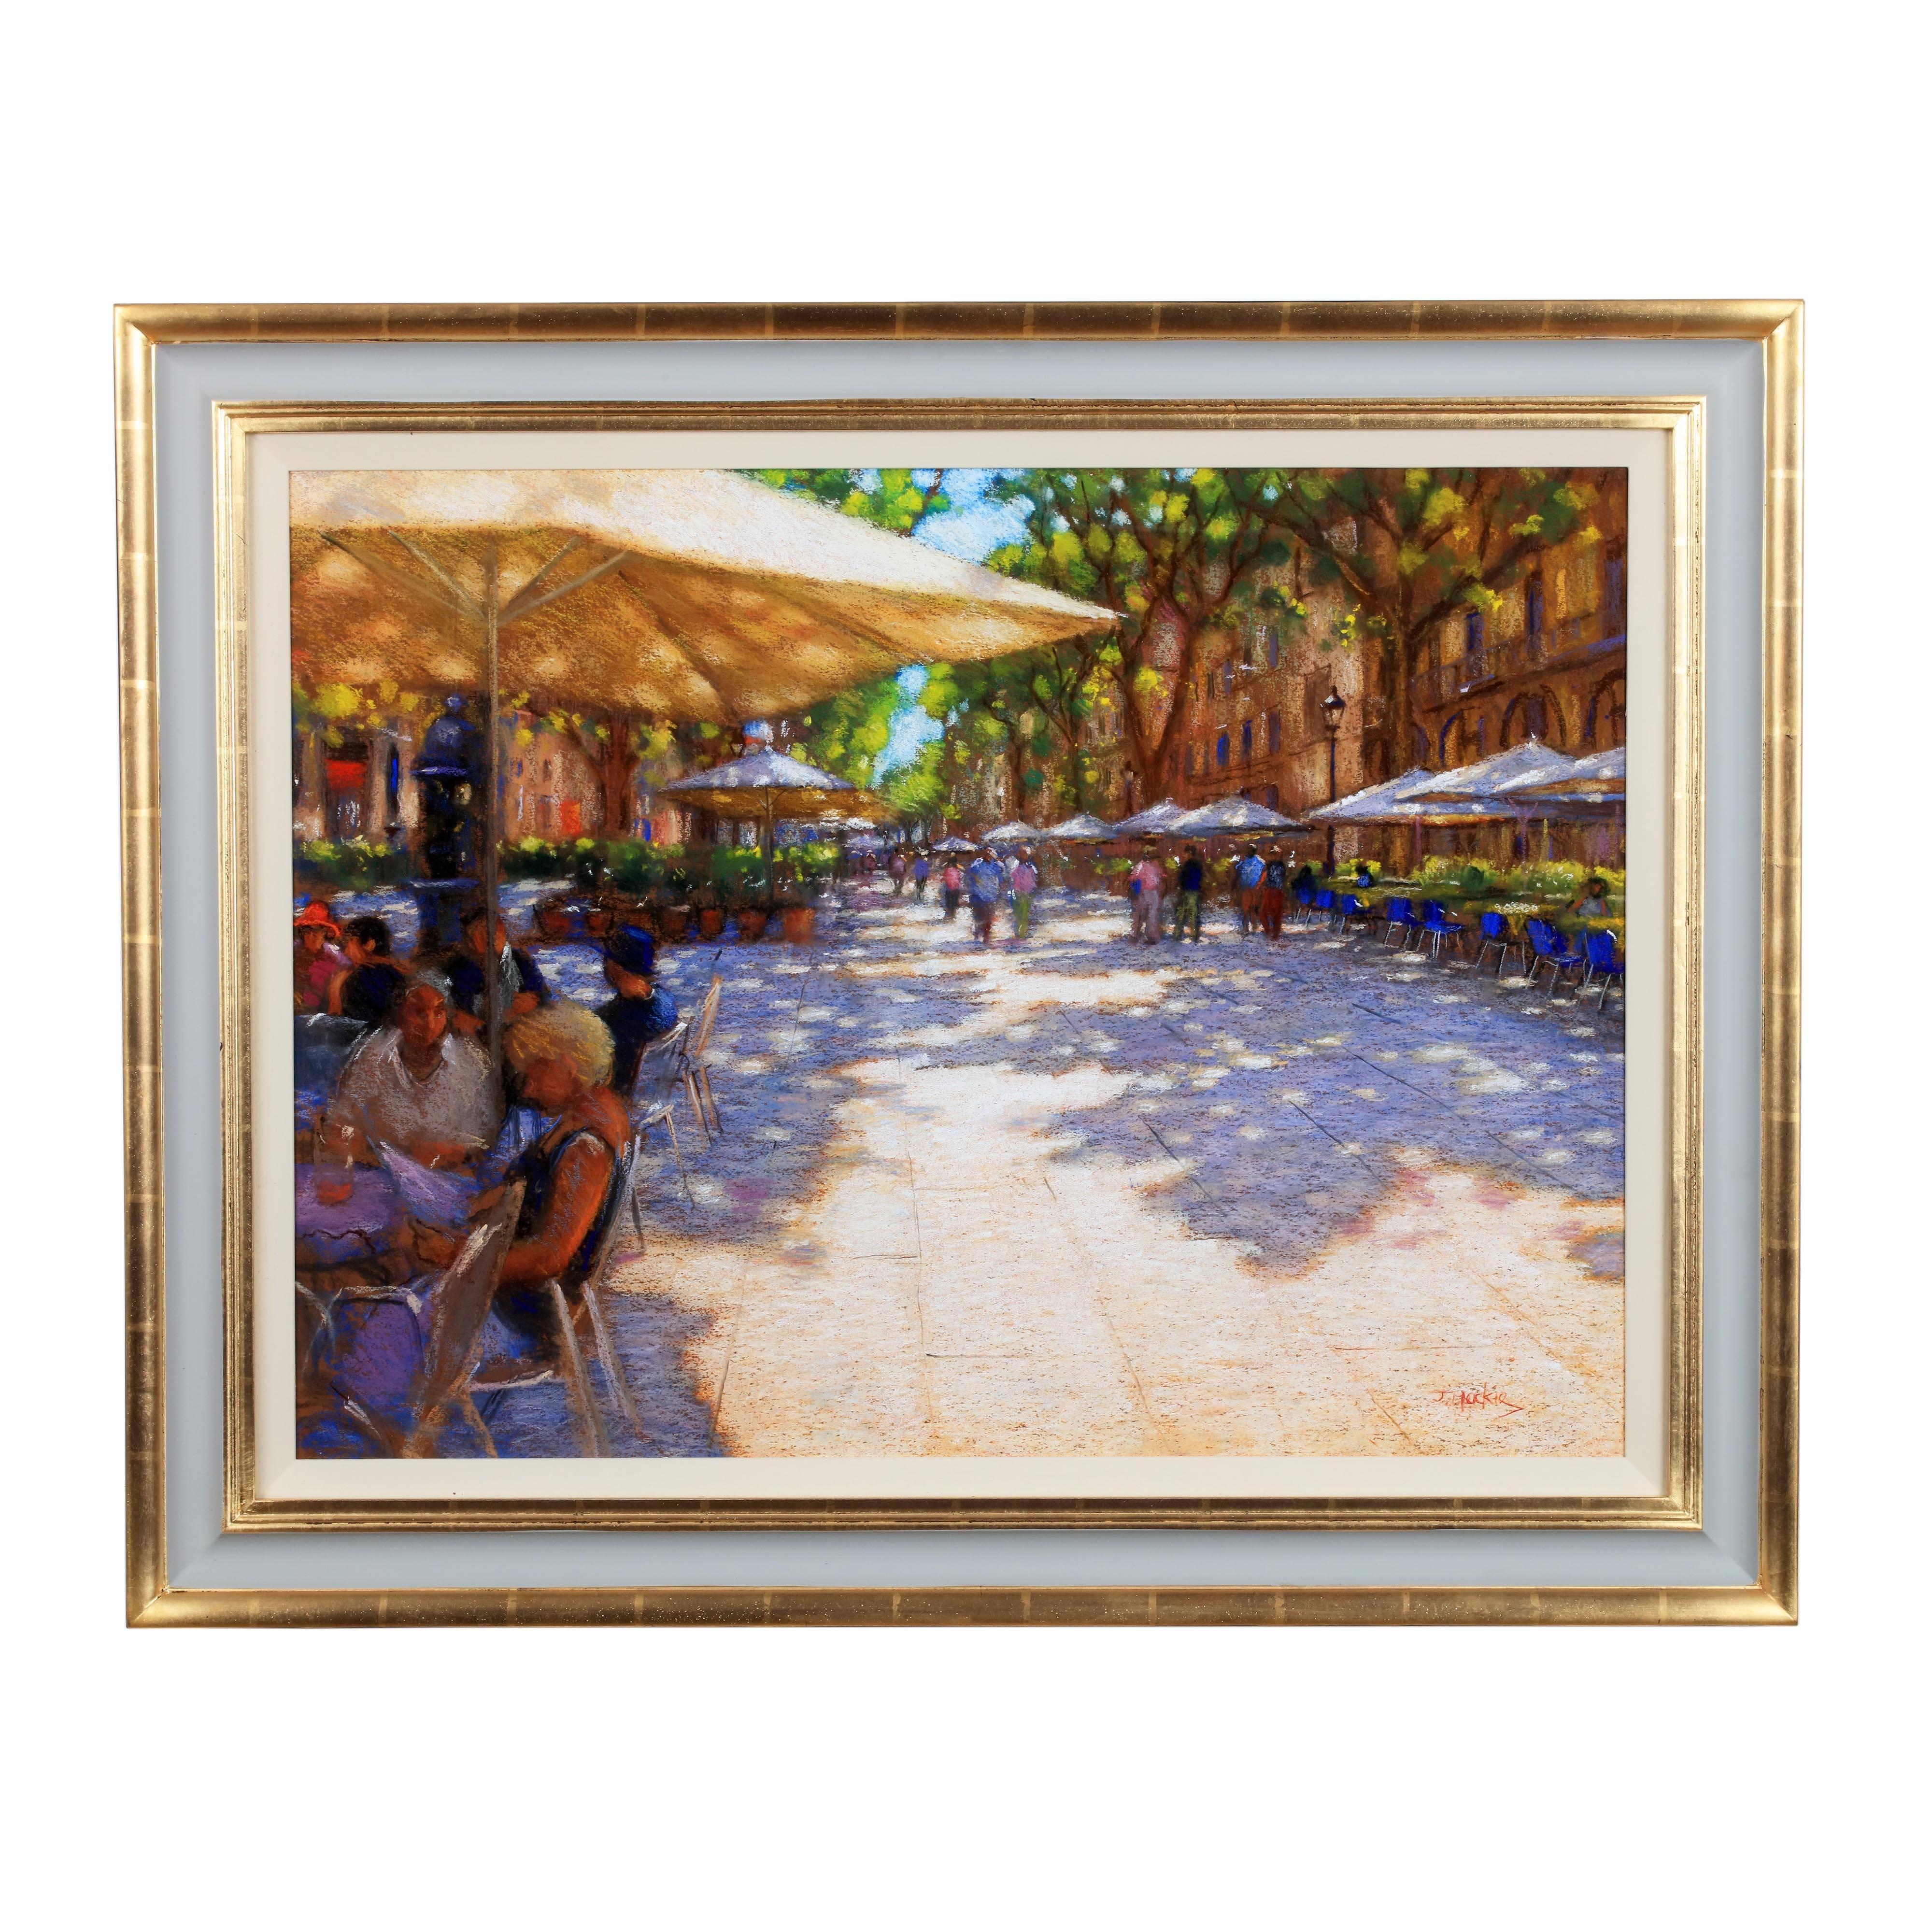 John Mackie - “In the shade, Ramblas, Barcelona” - Painting by John Mackie (b.1955)